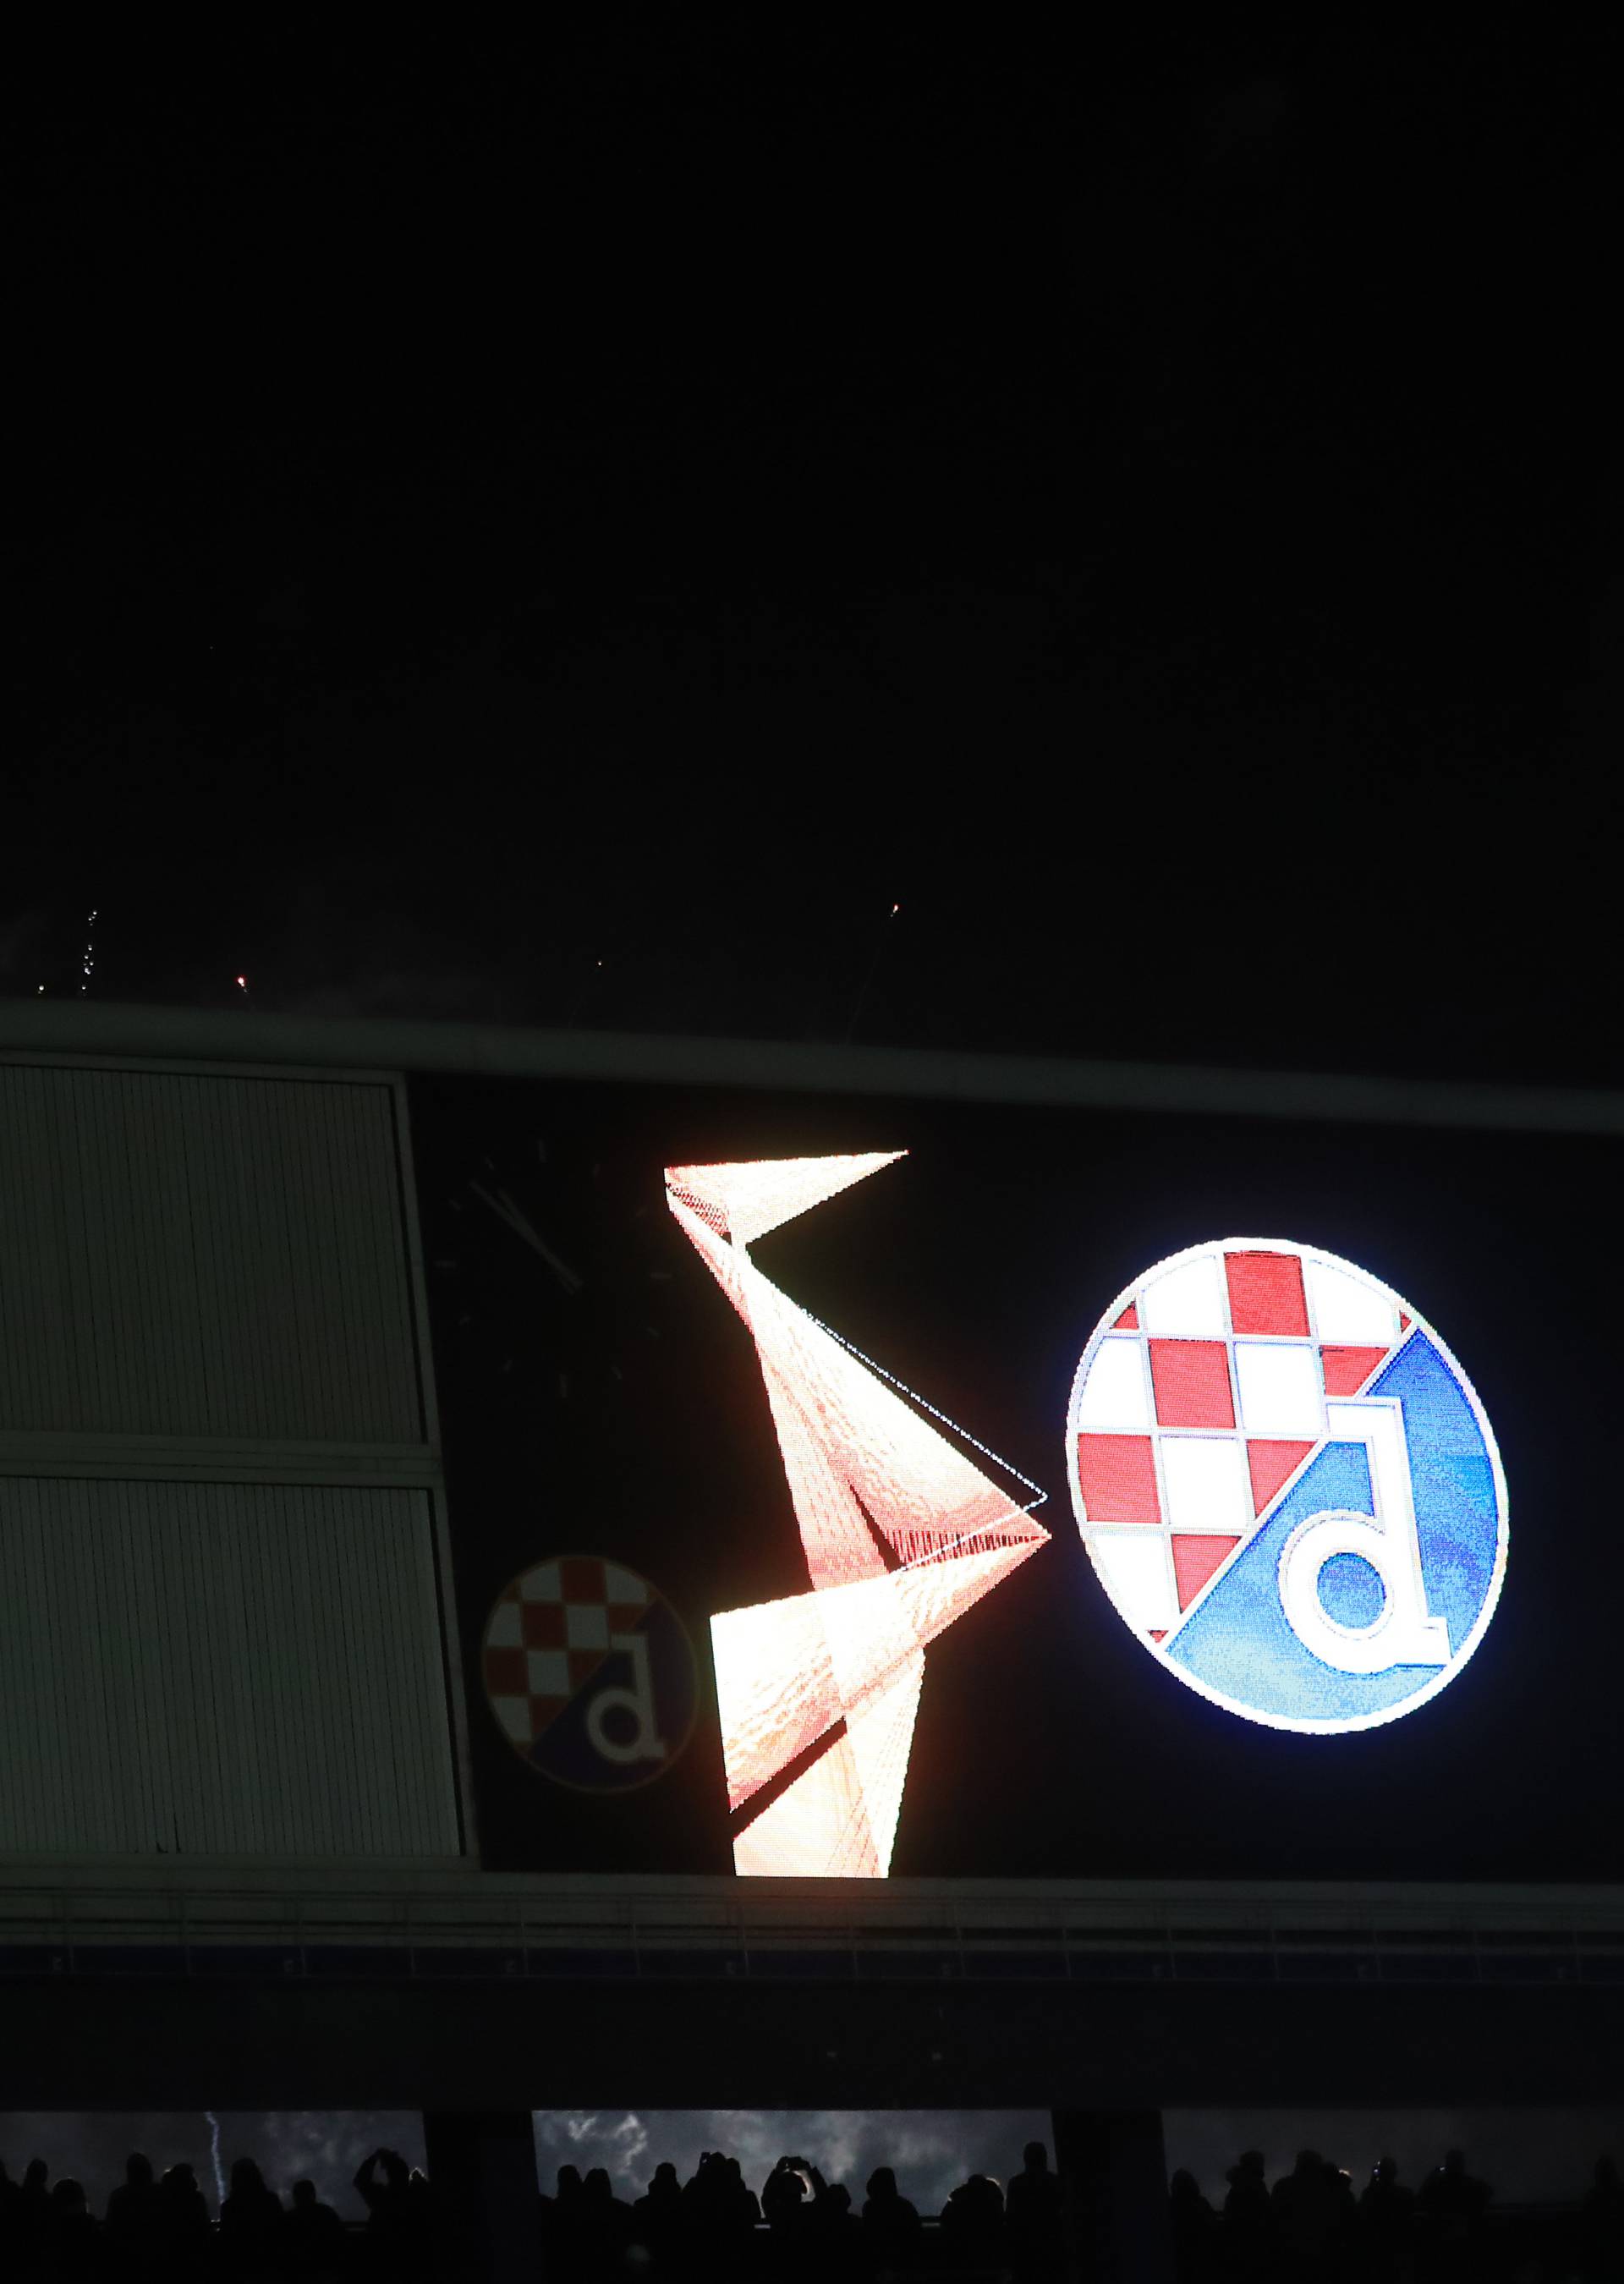 Zagreb: Dinamo i Anderlecht sastali se u 6. kolu Europske lige